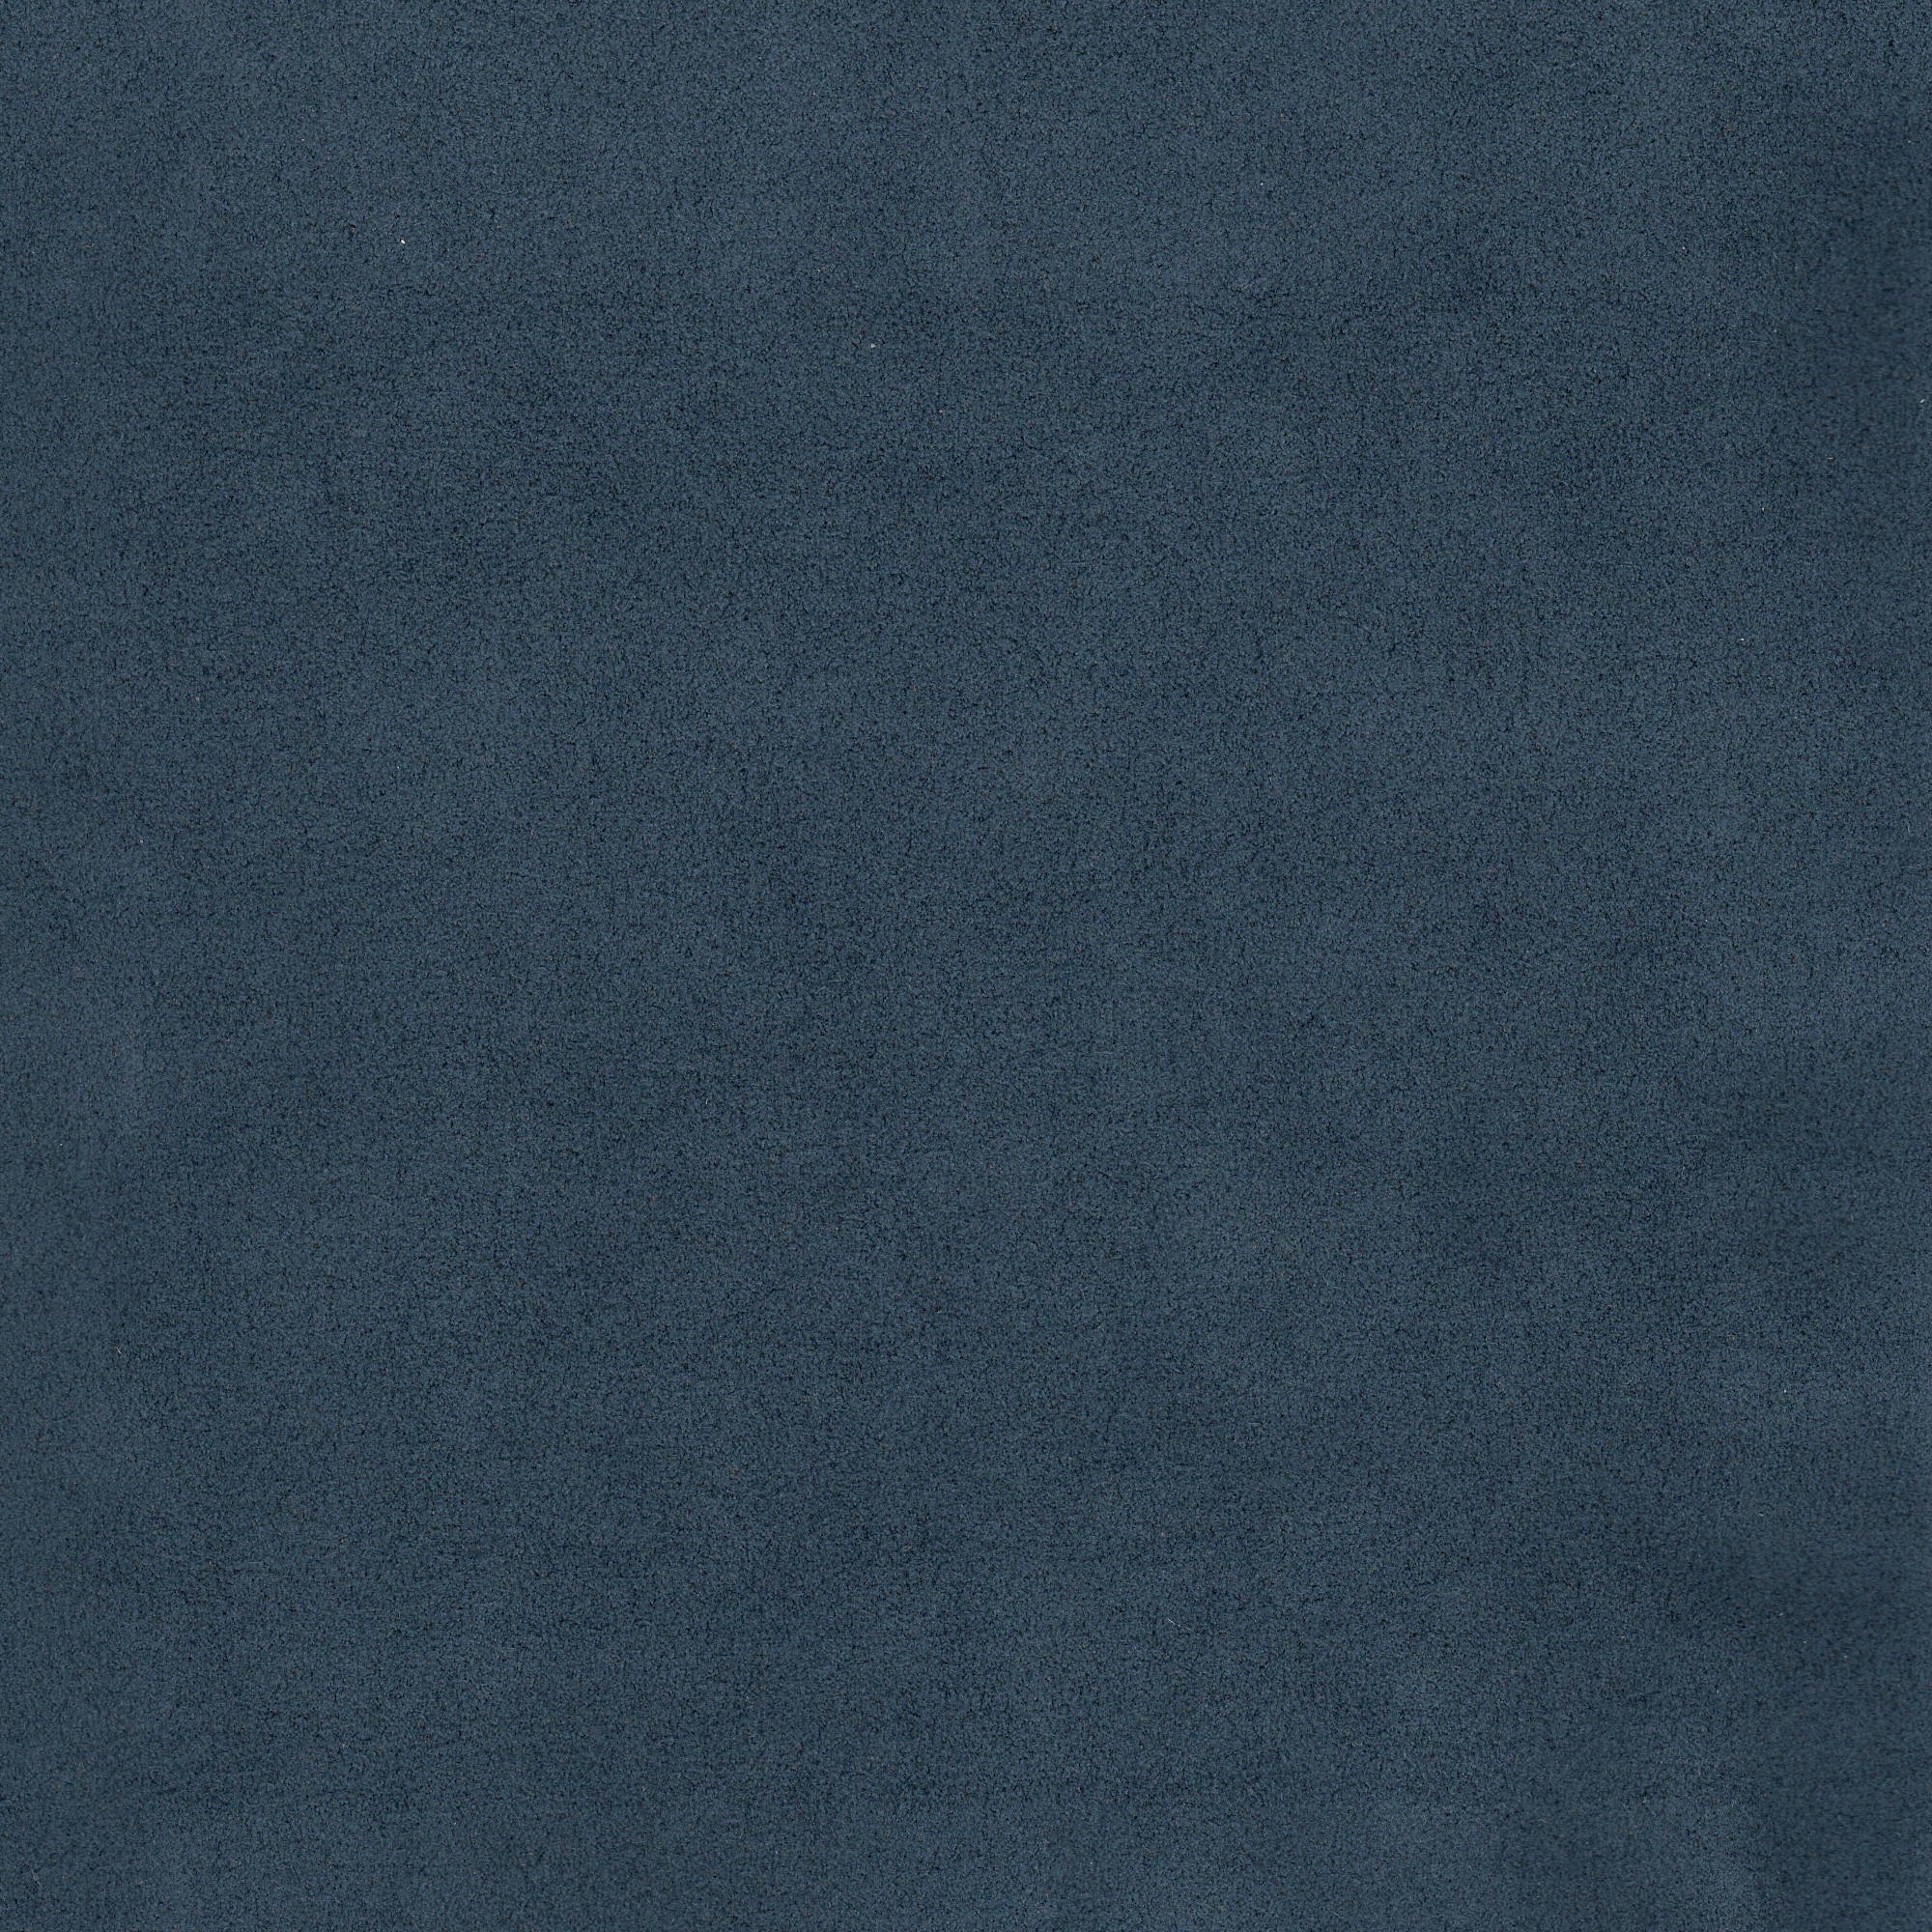 Ultrasuede - 2680 Slate Blue (Copy)